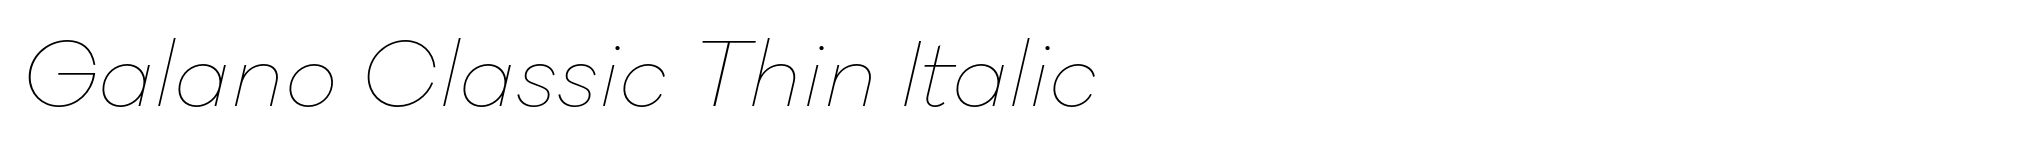 Galano Classic Thin Italic image